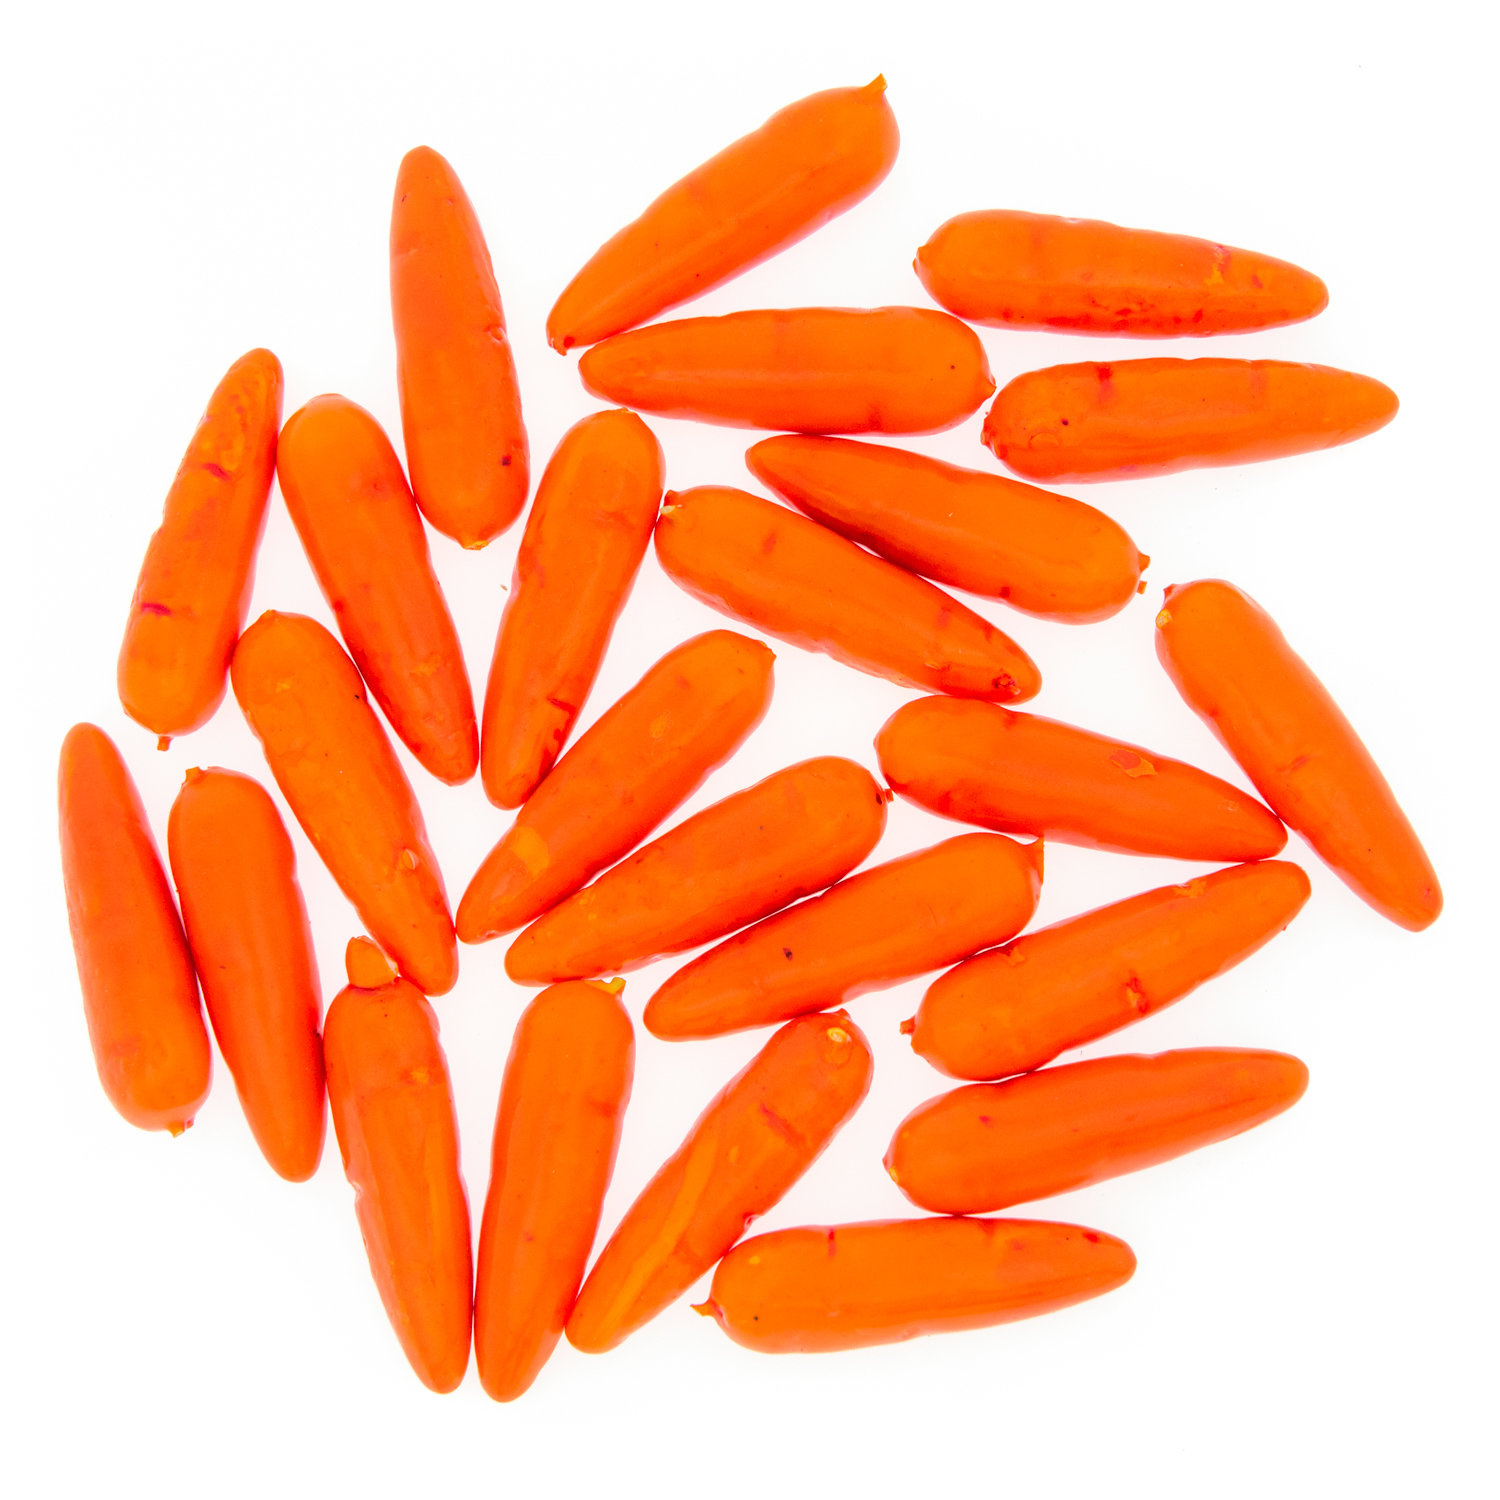 Счетный материал Анданте морковочки 24 элемента - фото 1